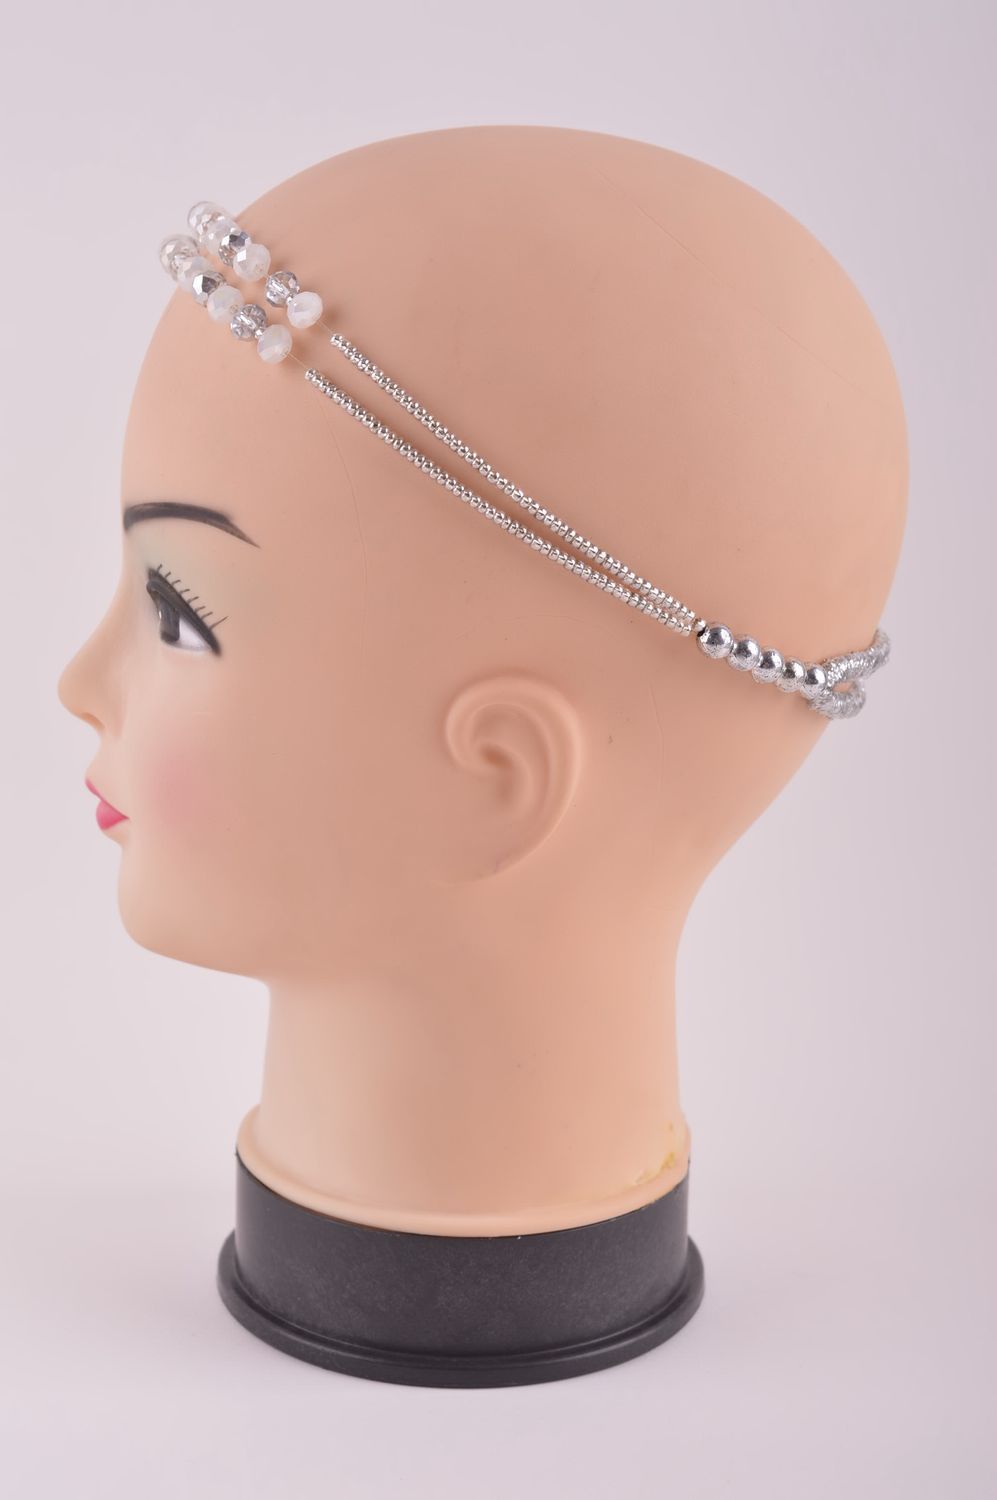 Haar Schmuck Dünnes Haarband handgemachter Schmuck Accessoire für Haare modisch foto 3